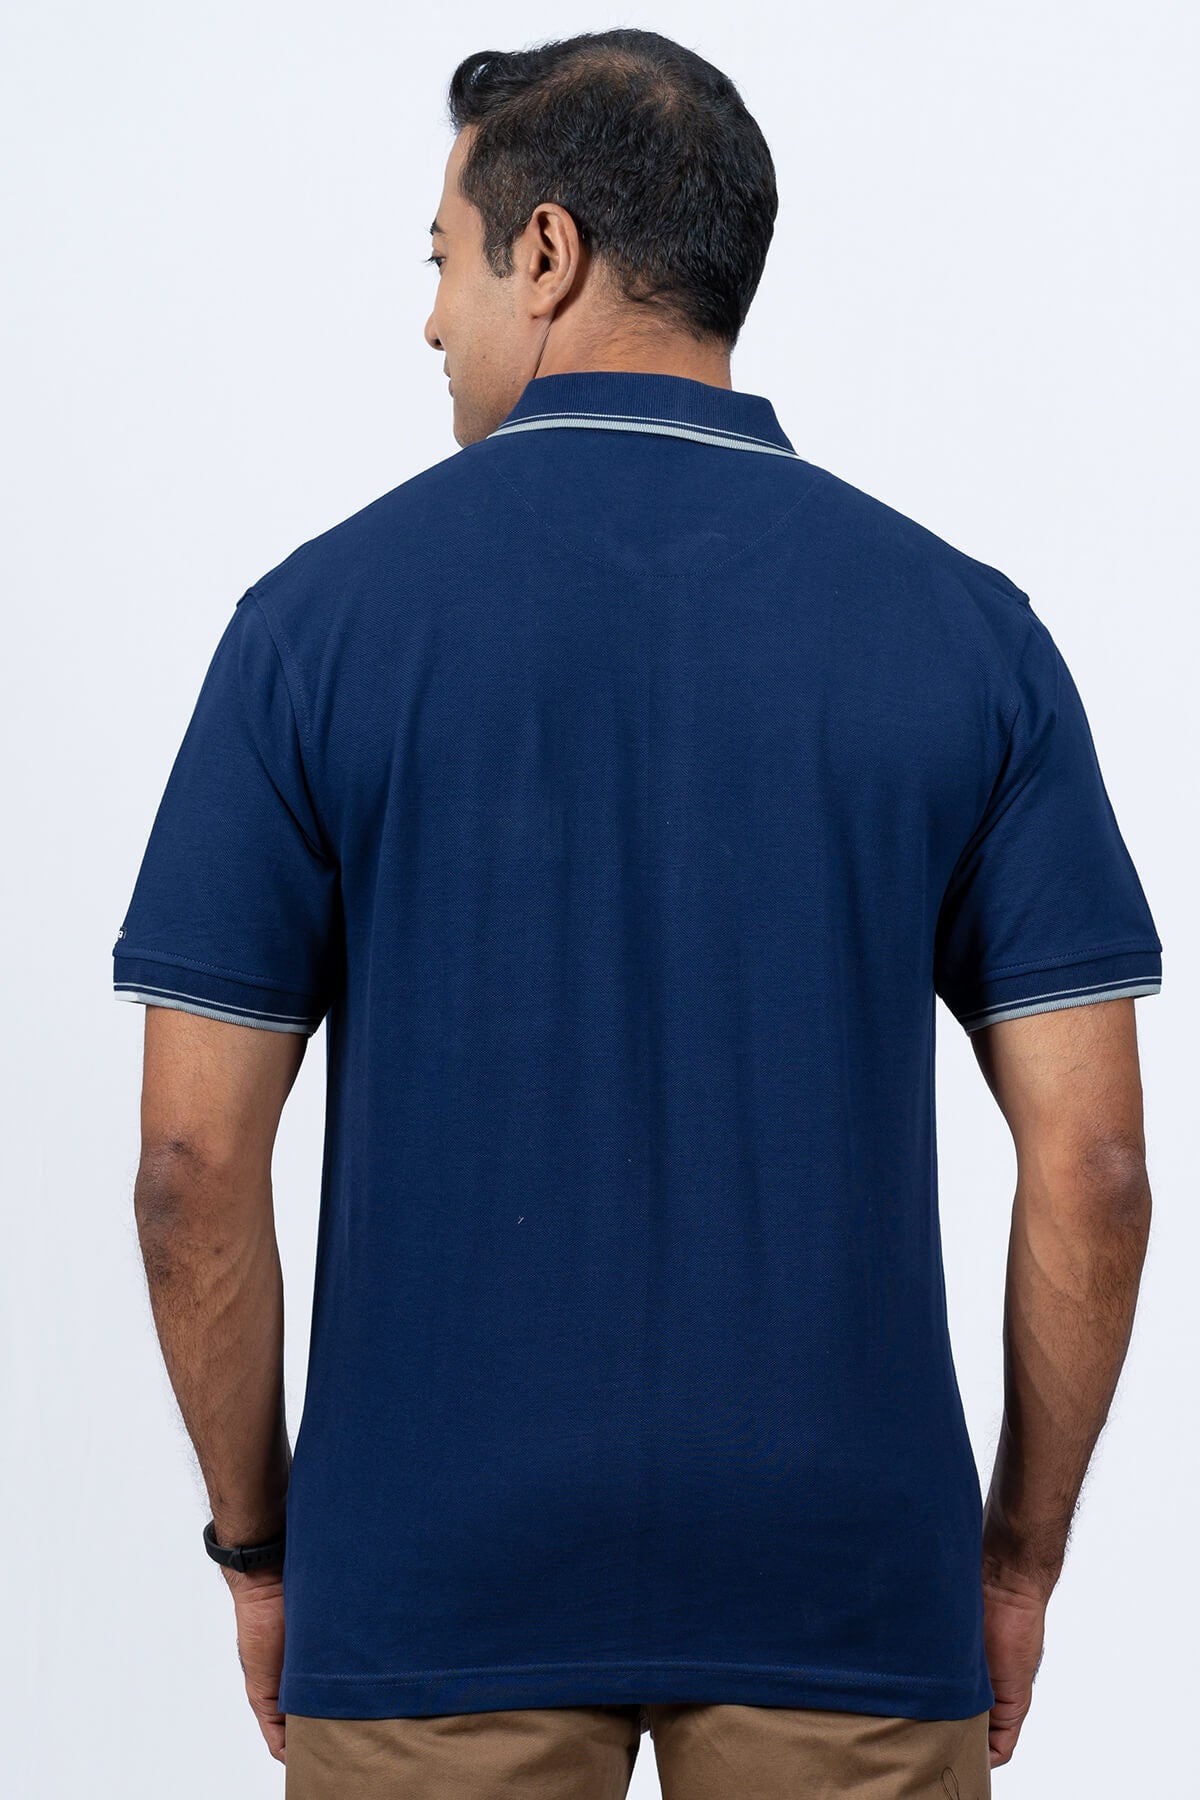 Mens Navy Blue T Shirt